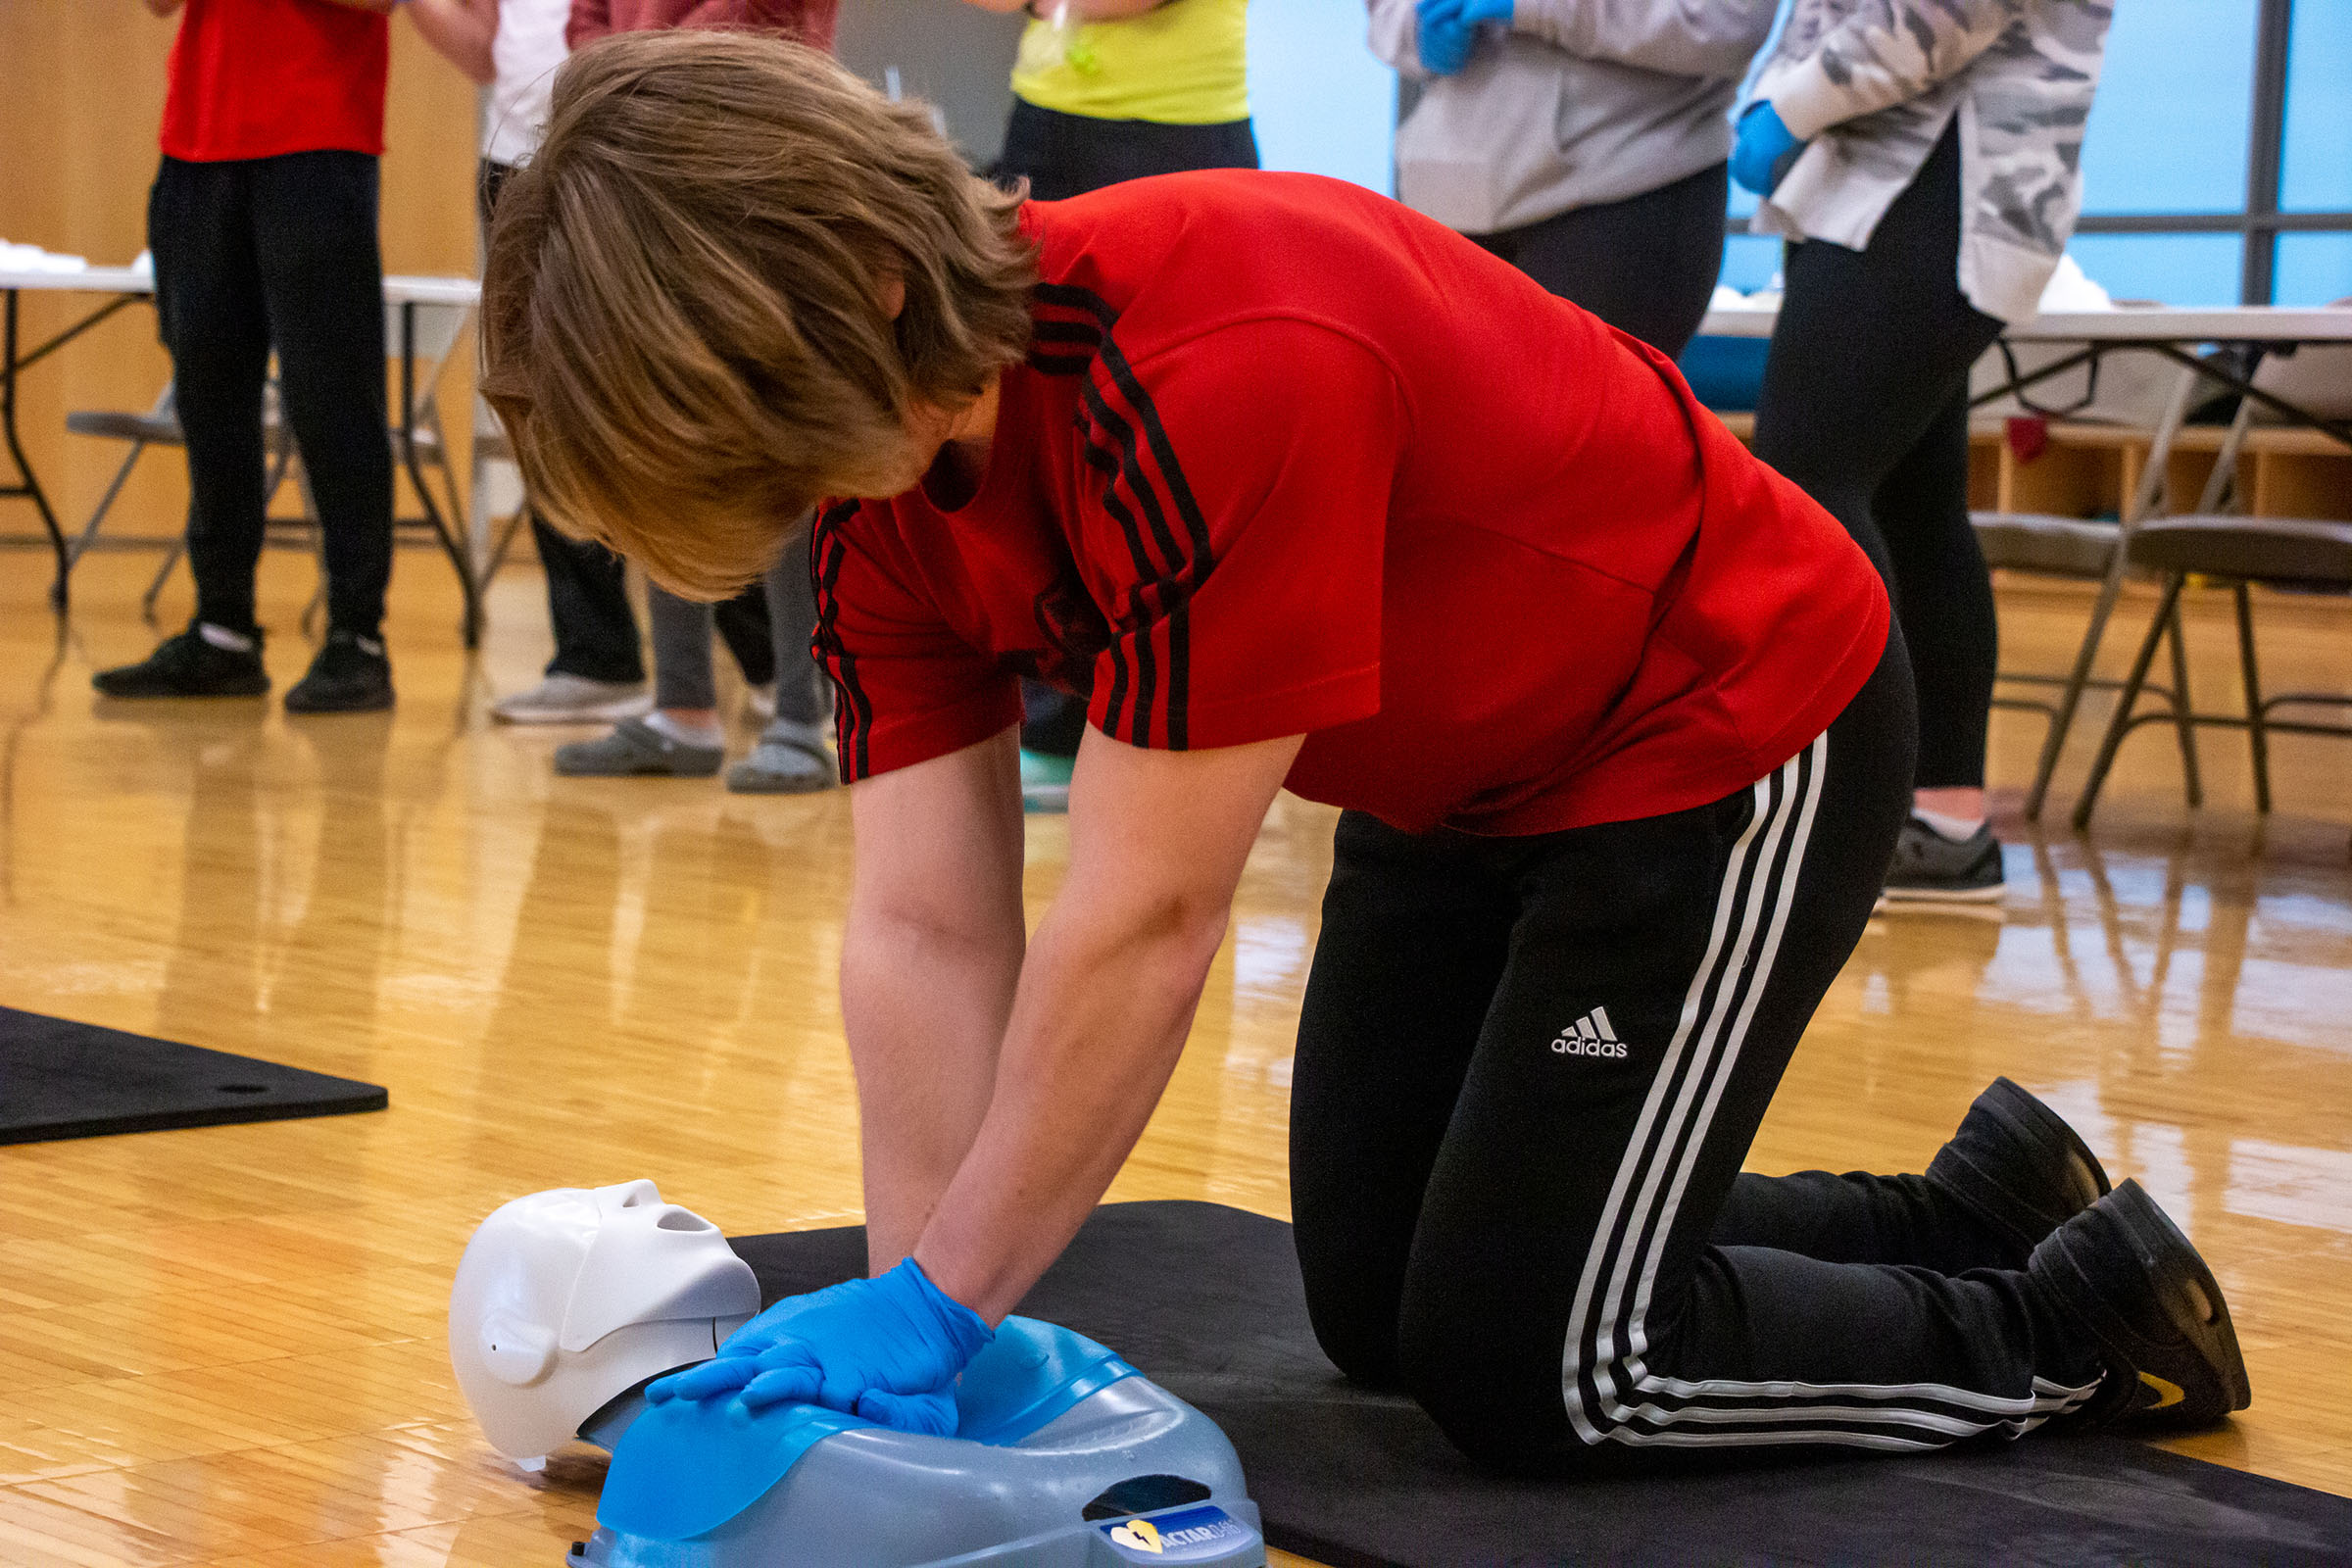 CPR class teaches lifesaving skills